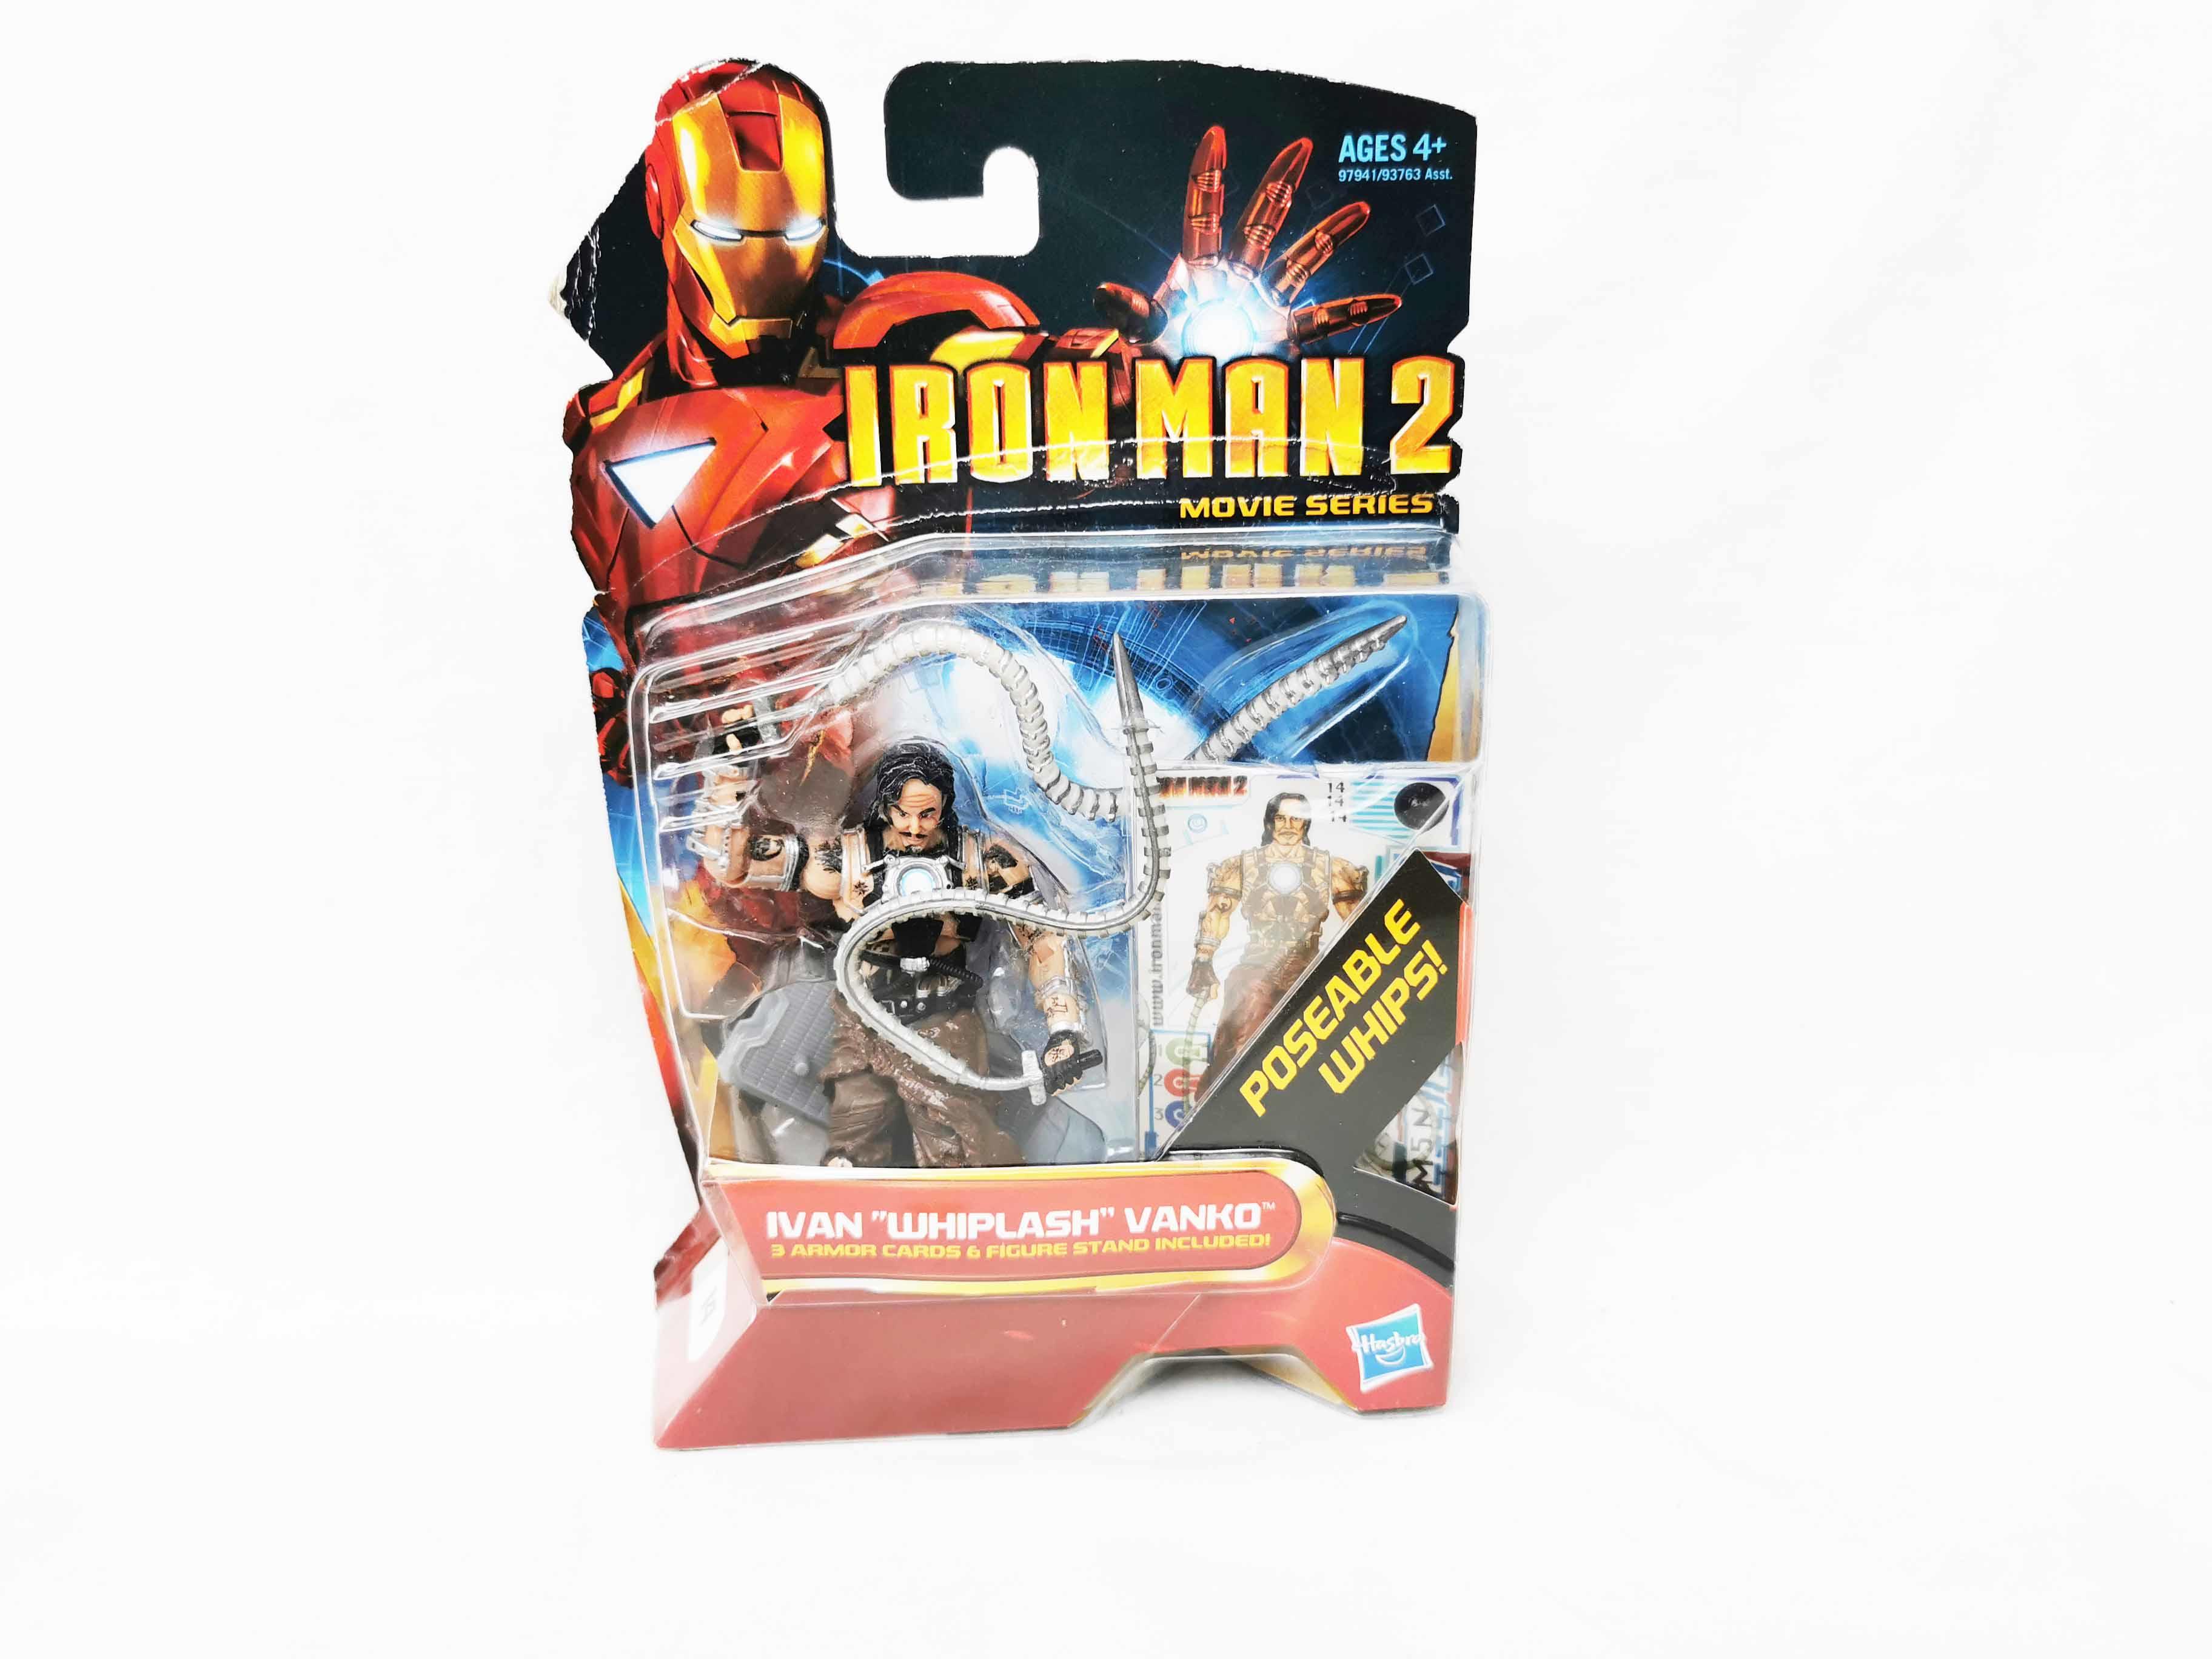 Ivan Whiplash Vanko Marvel Universe Carded Action Figure 3.75 scale Hasbro Iron Man 2 Movie